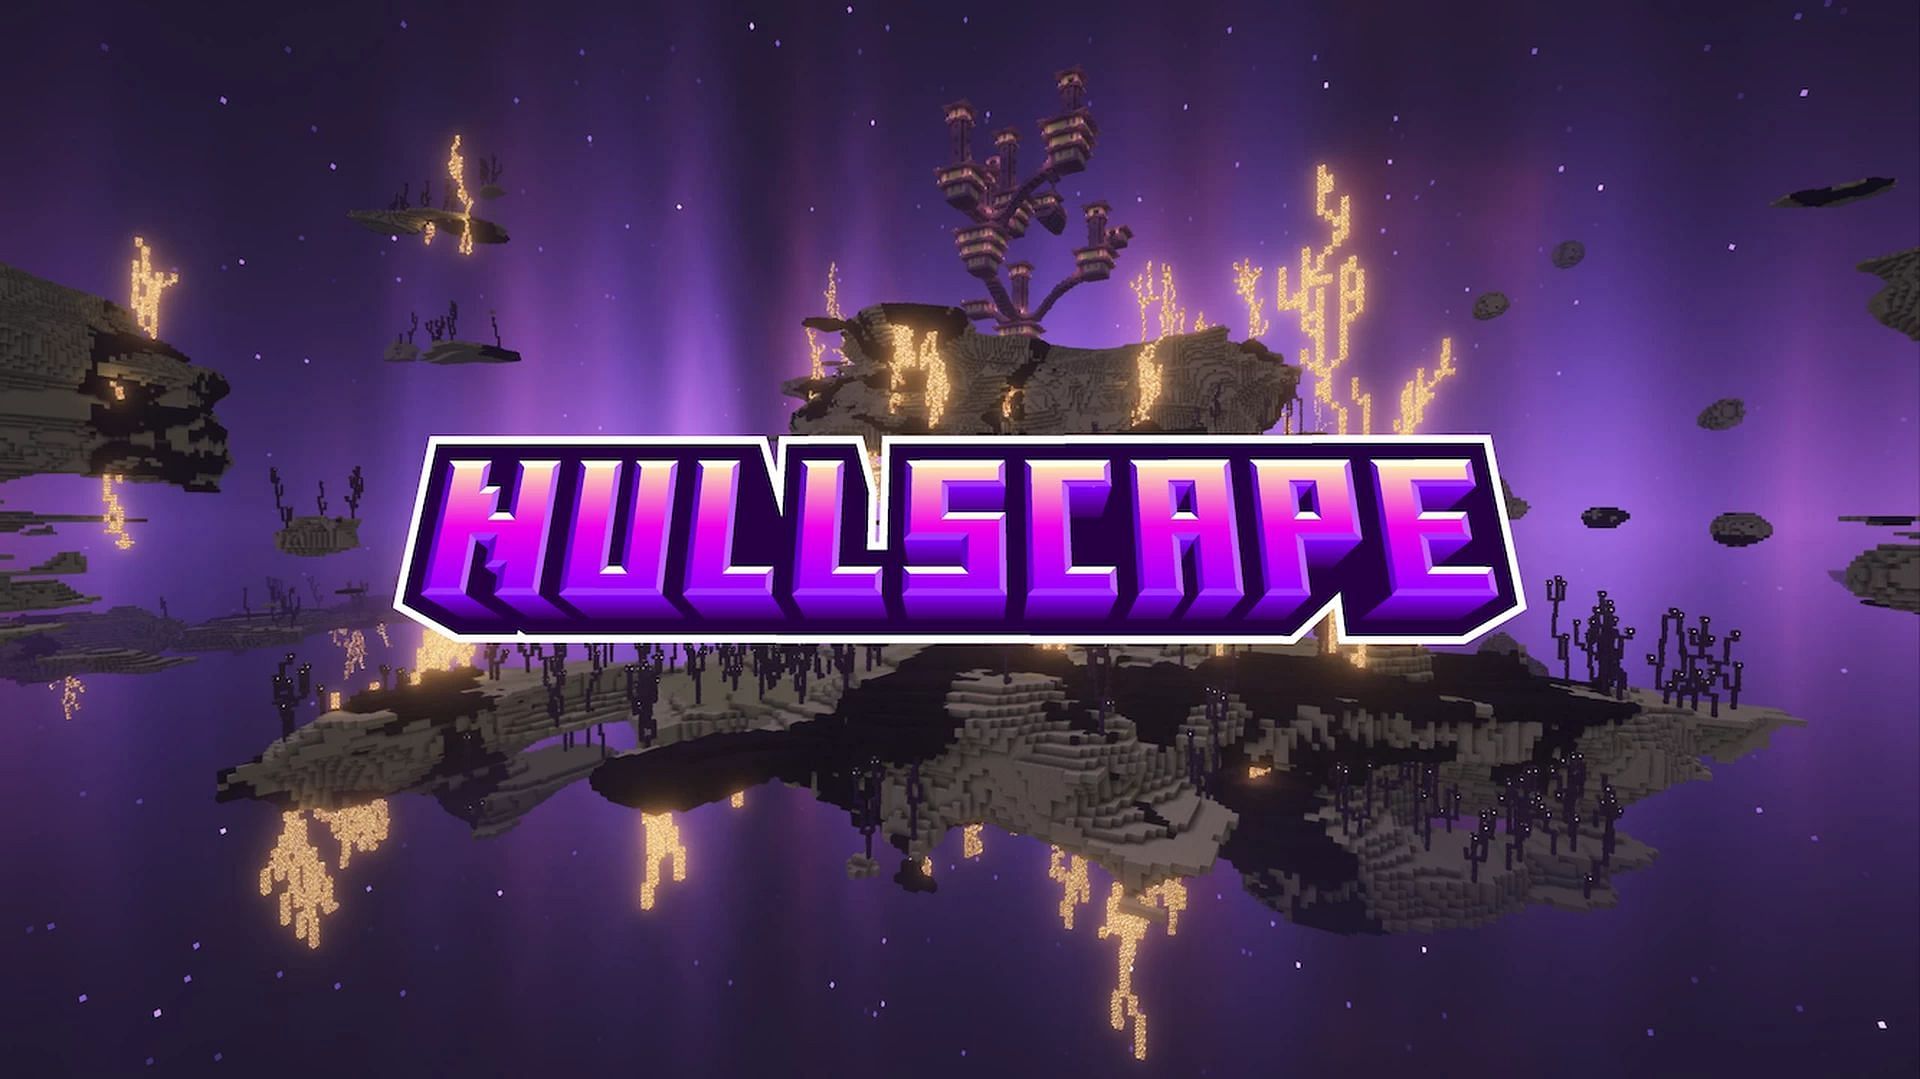 The Nullscape title image (Image via planetminecraft.com)